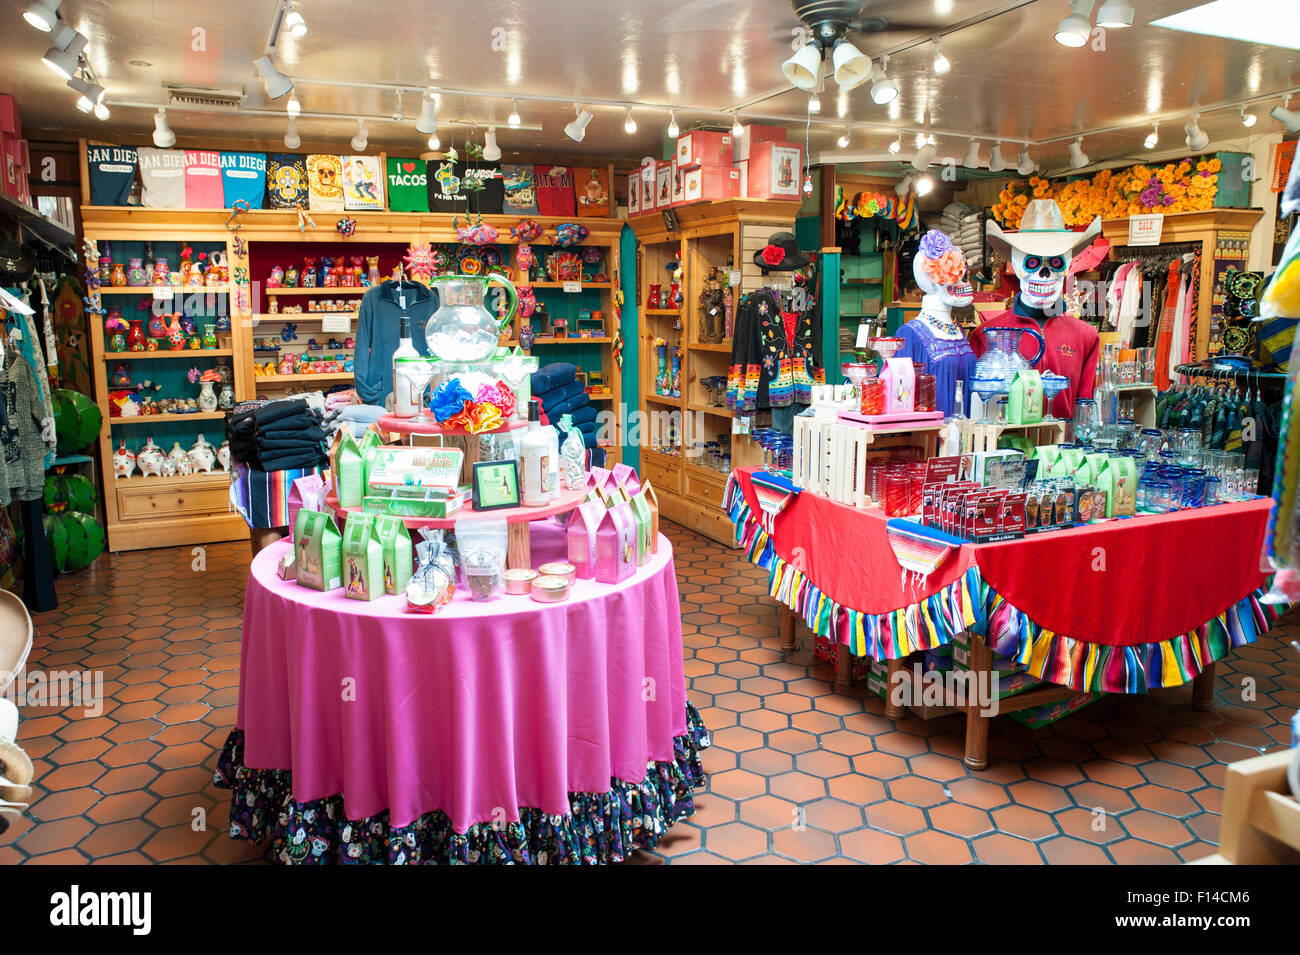 A gift shop at Old Town San Diego, San Diego, California, USA Stock Photo